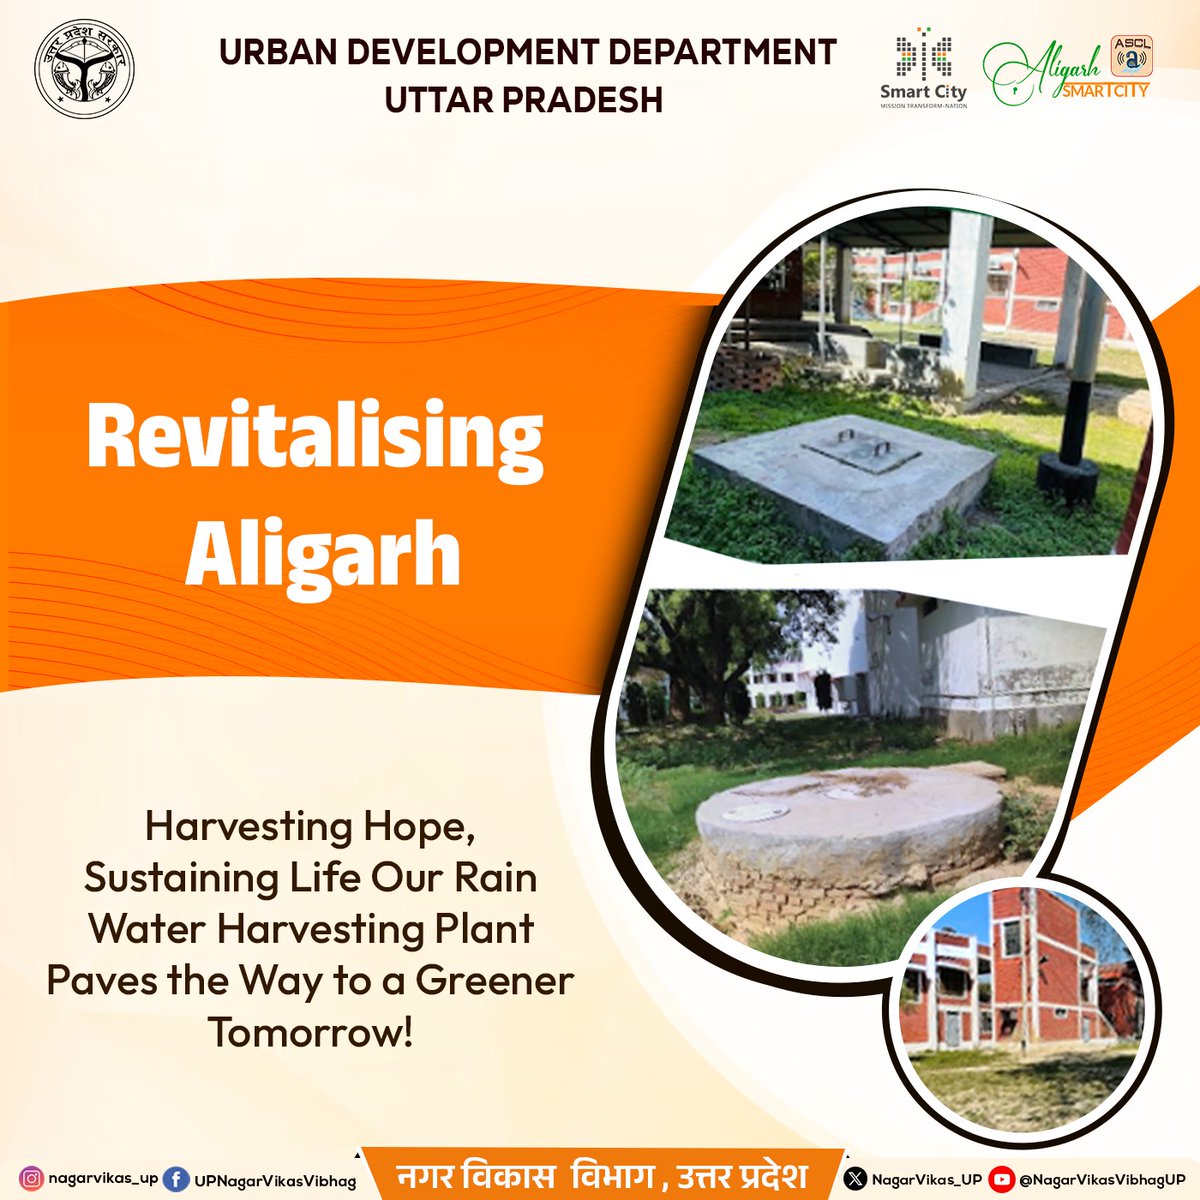 Revitalising Aligarh: Our Rain Water Harvesting Plant - Harvesting Hope and Paving the Way to a Greener Tomorrow!

#Smartcity #aligarh #urbandevelopment #uttarpradesh